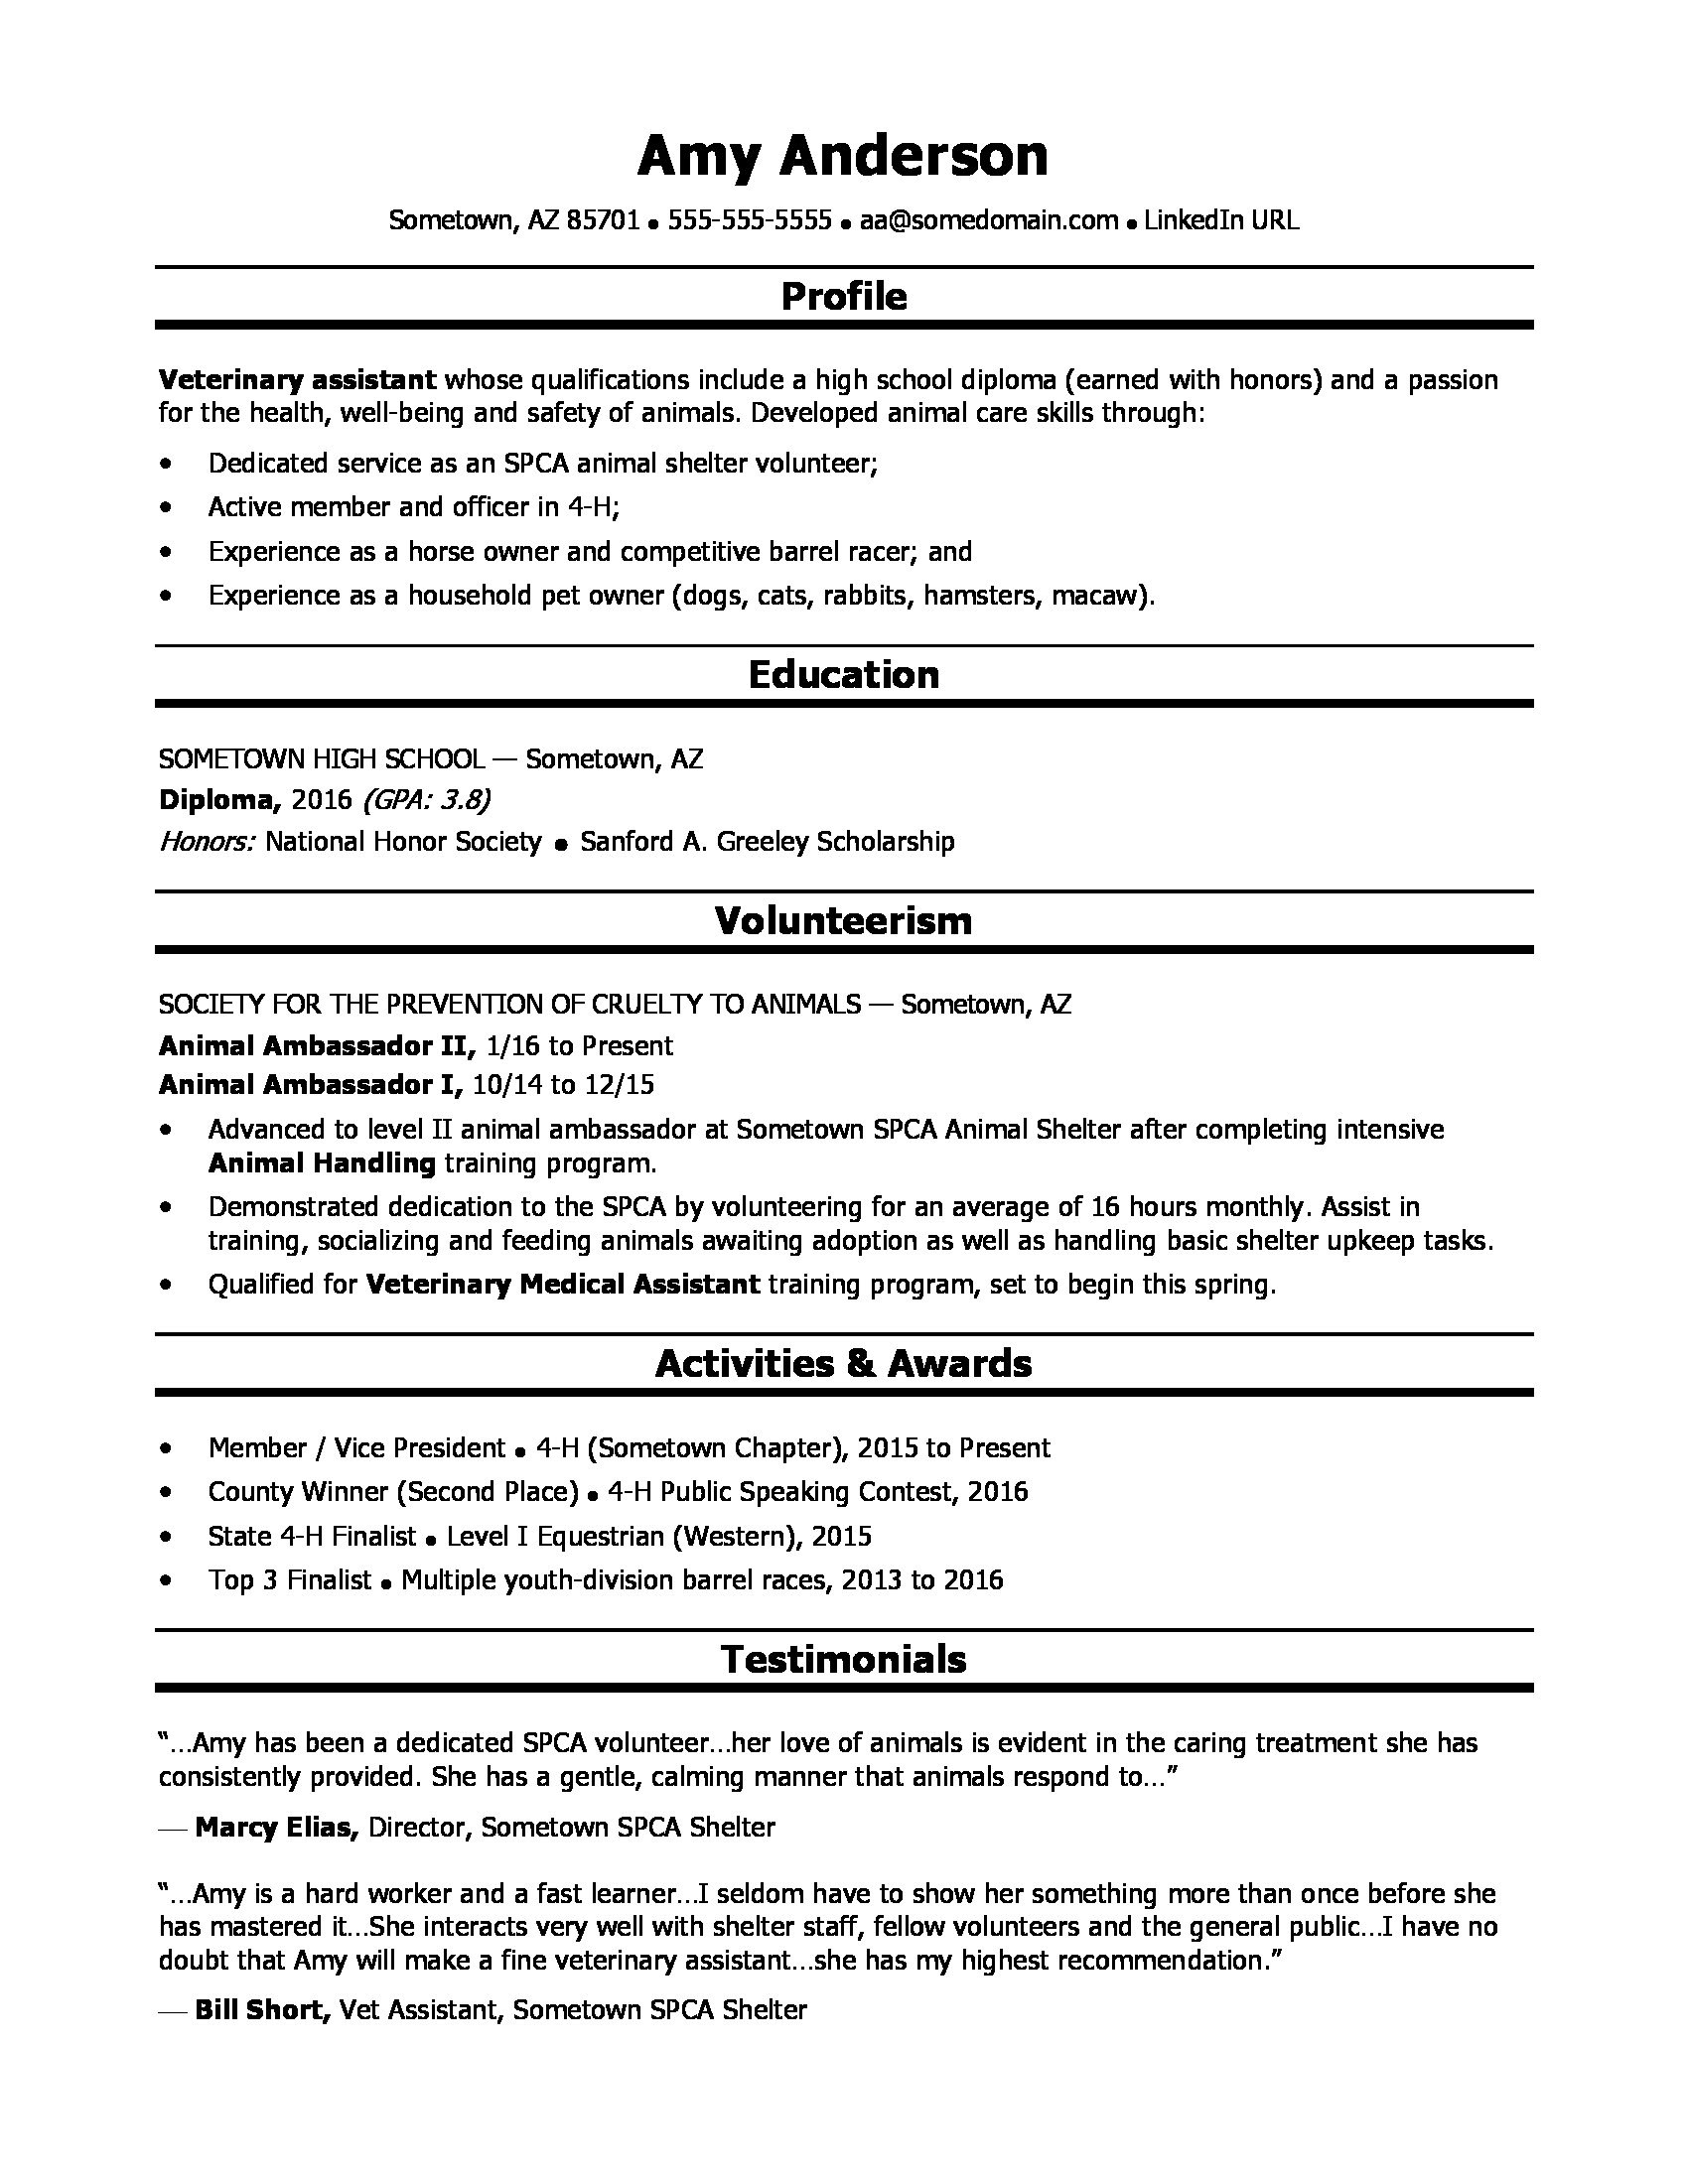 Basic Resume Template for High School Graduate High School Grad Resume Sample Monster.com